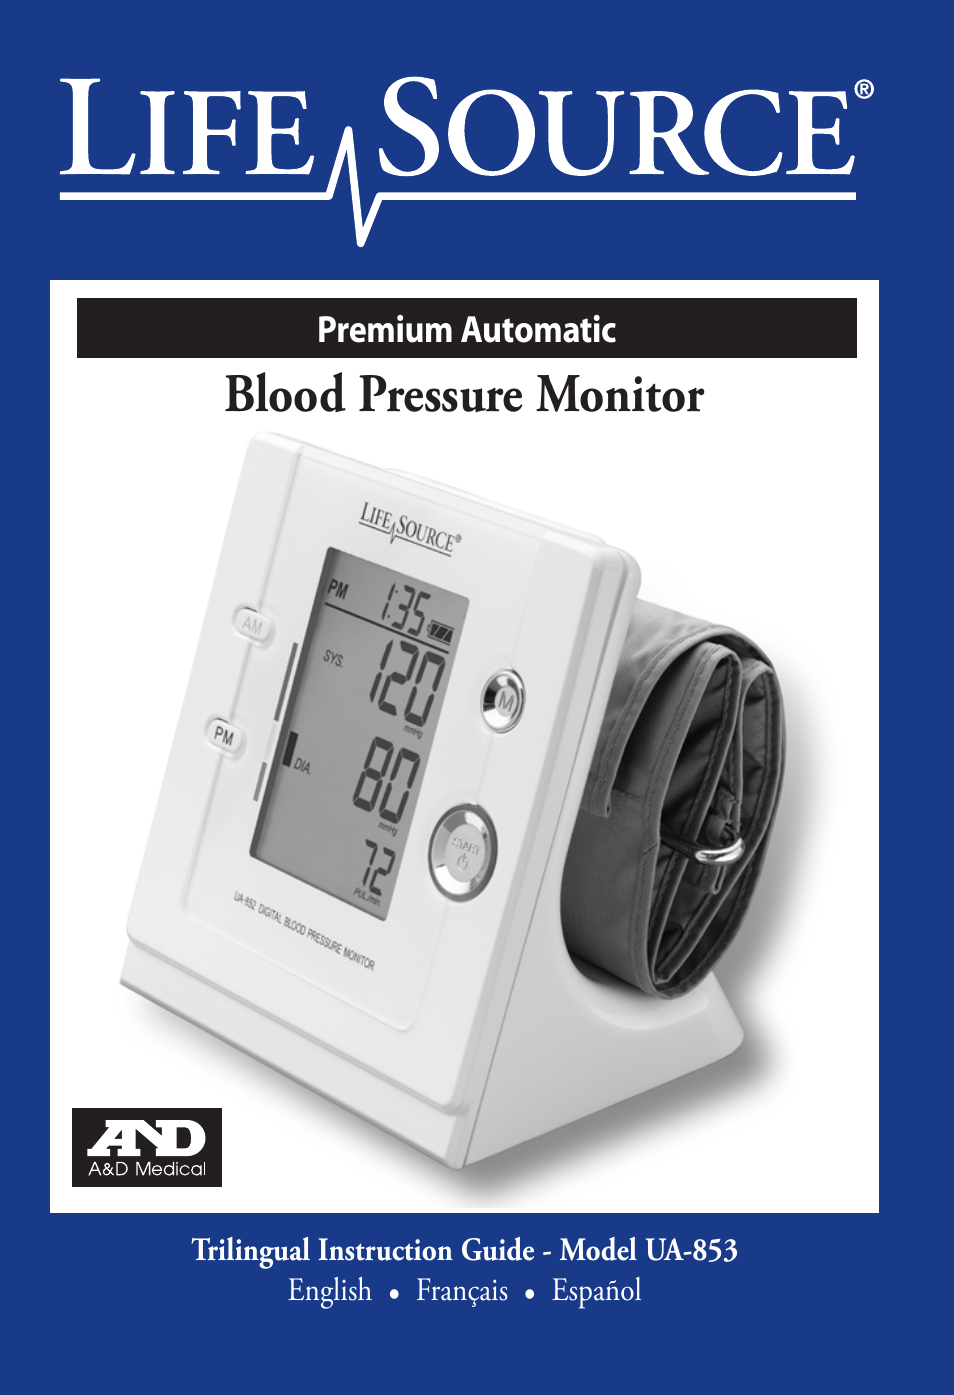 Blood Pressure Monitor UA-853 (Page 1)